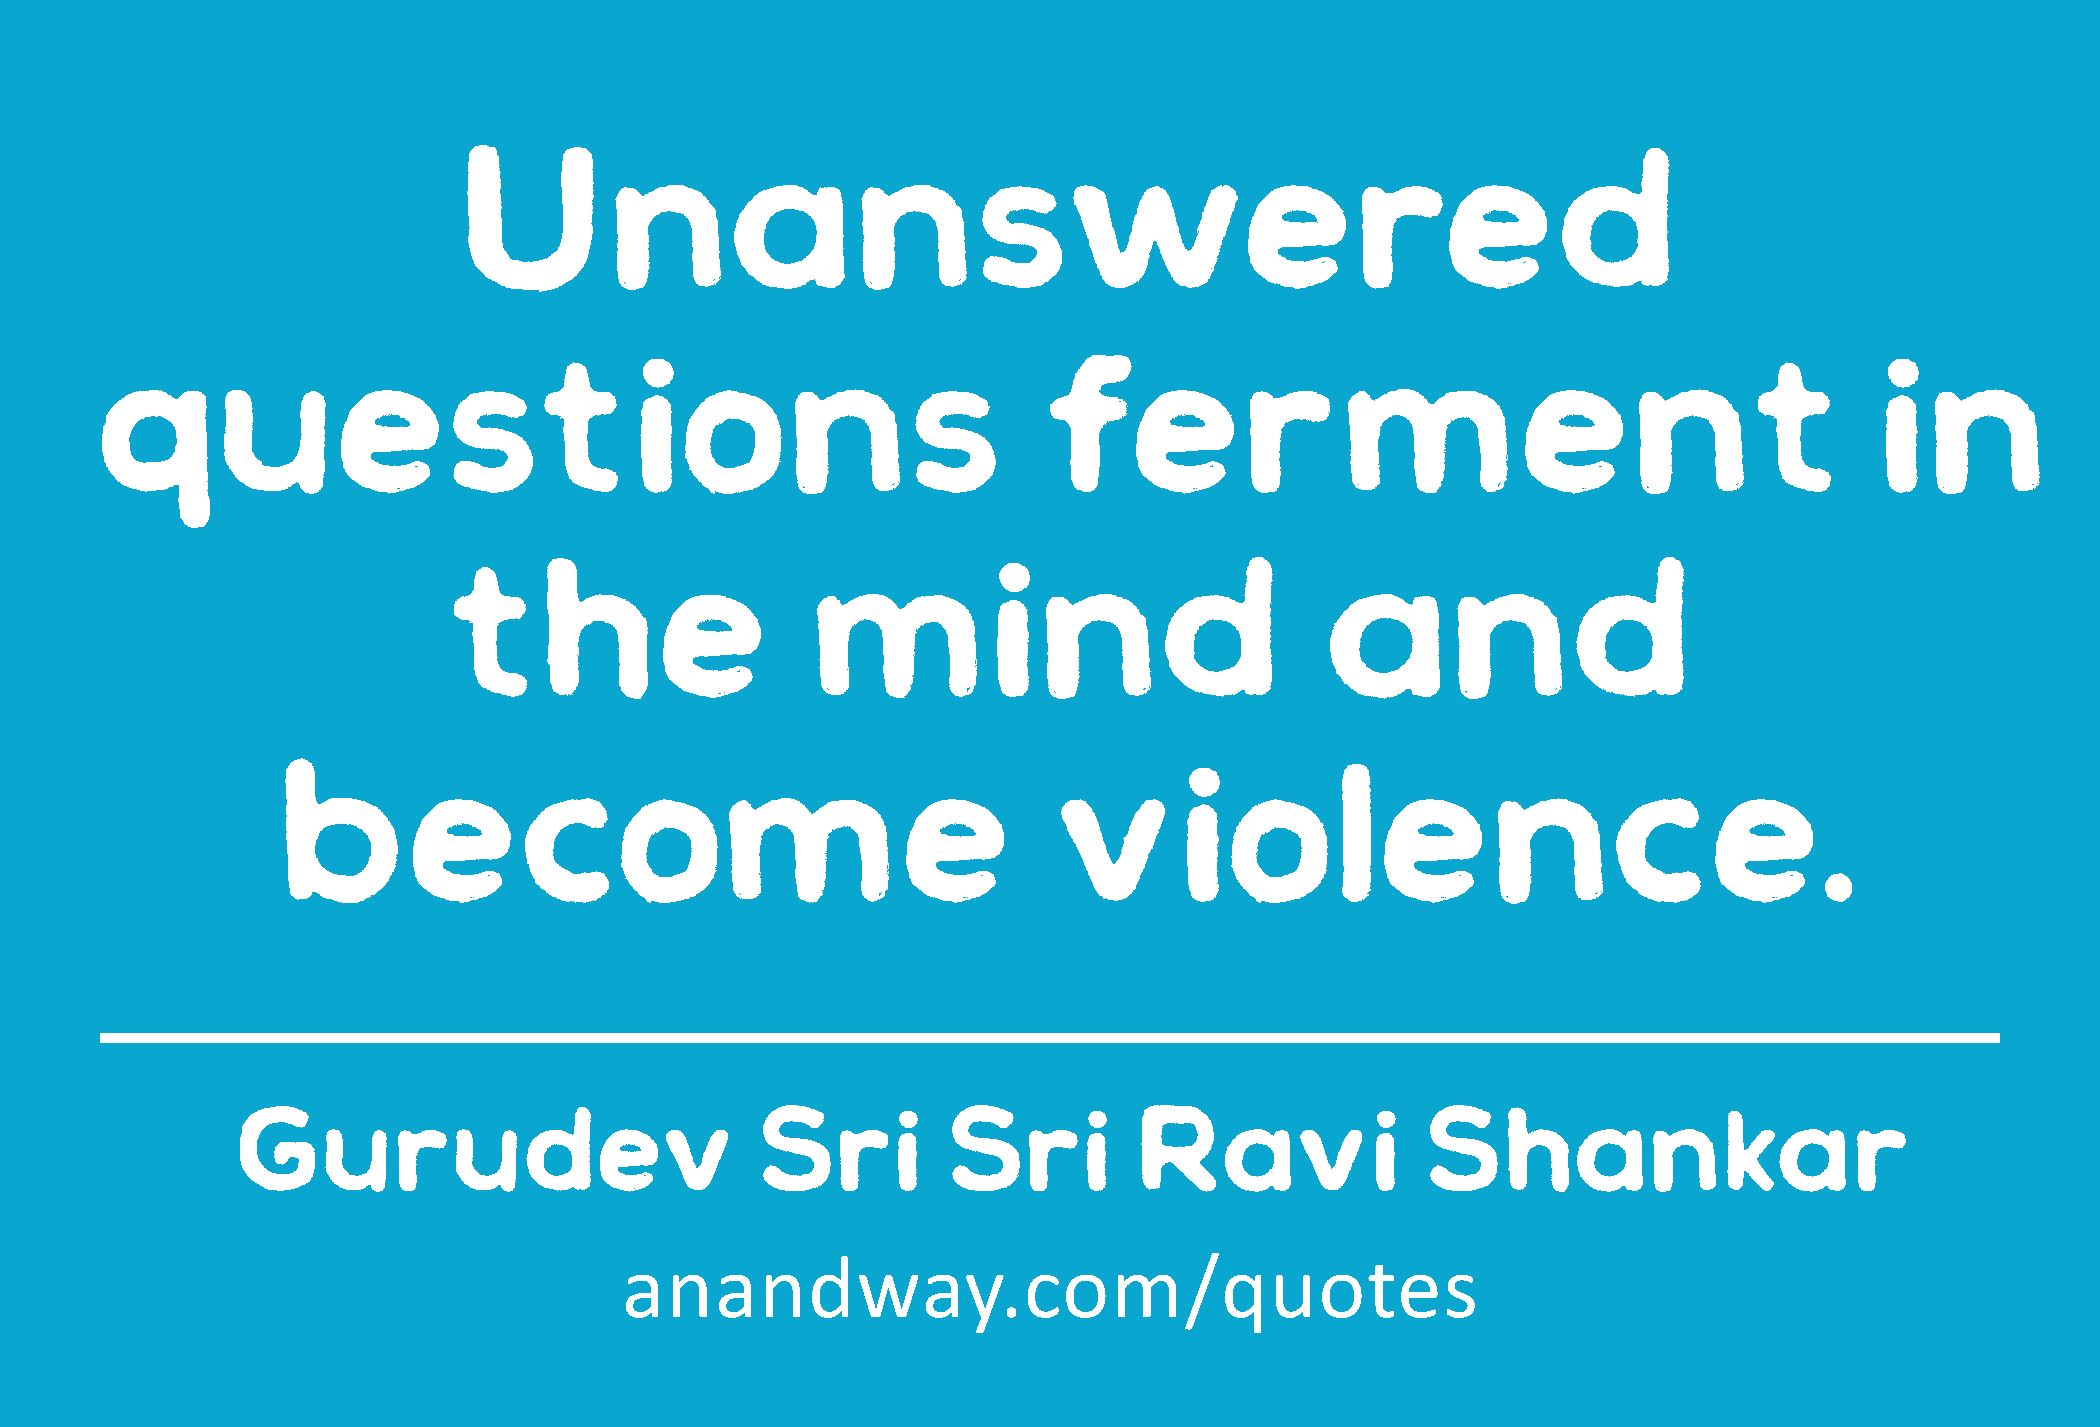 Unanswered questions ferment in the mind and become violence. 
 -Gurudev Sri Sri Ravi Shankar